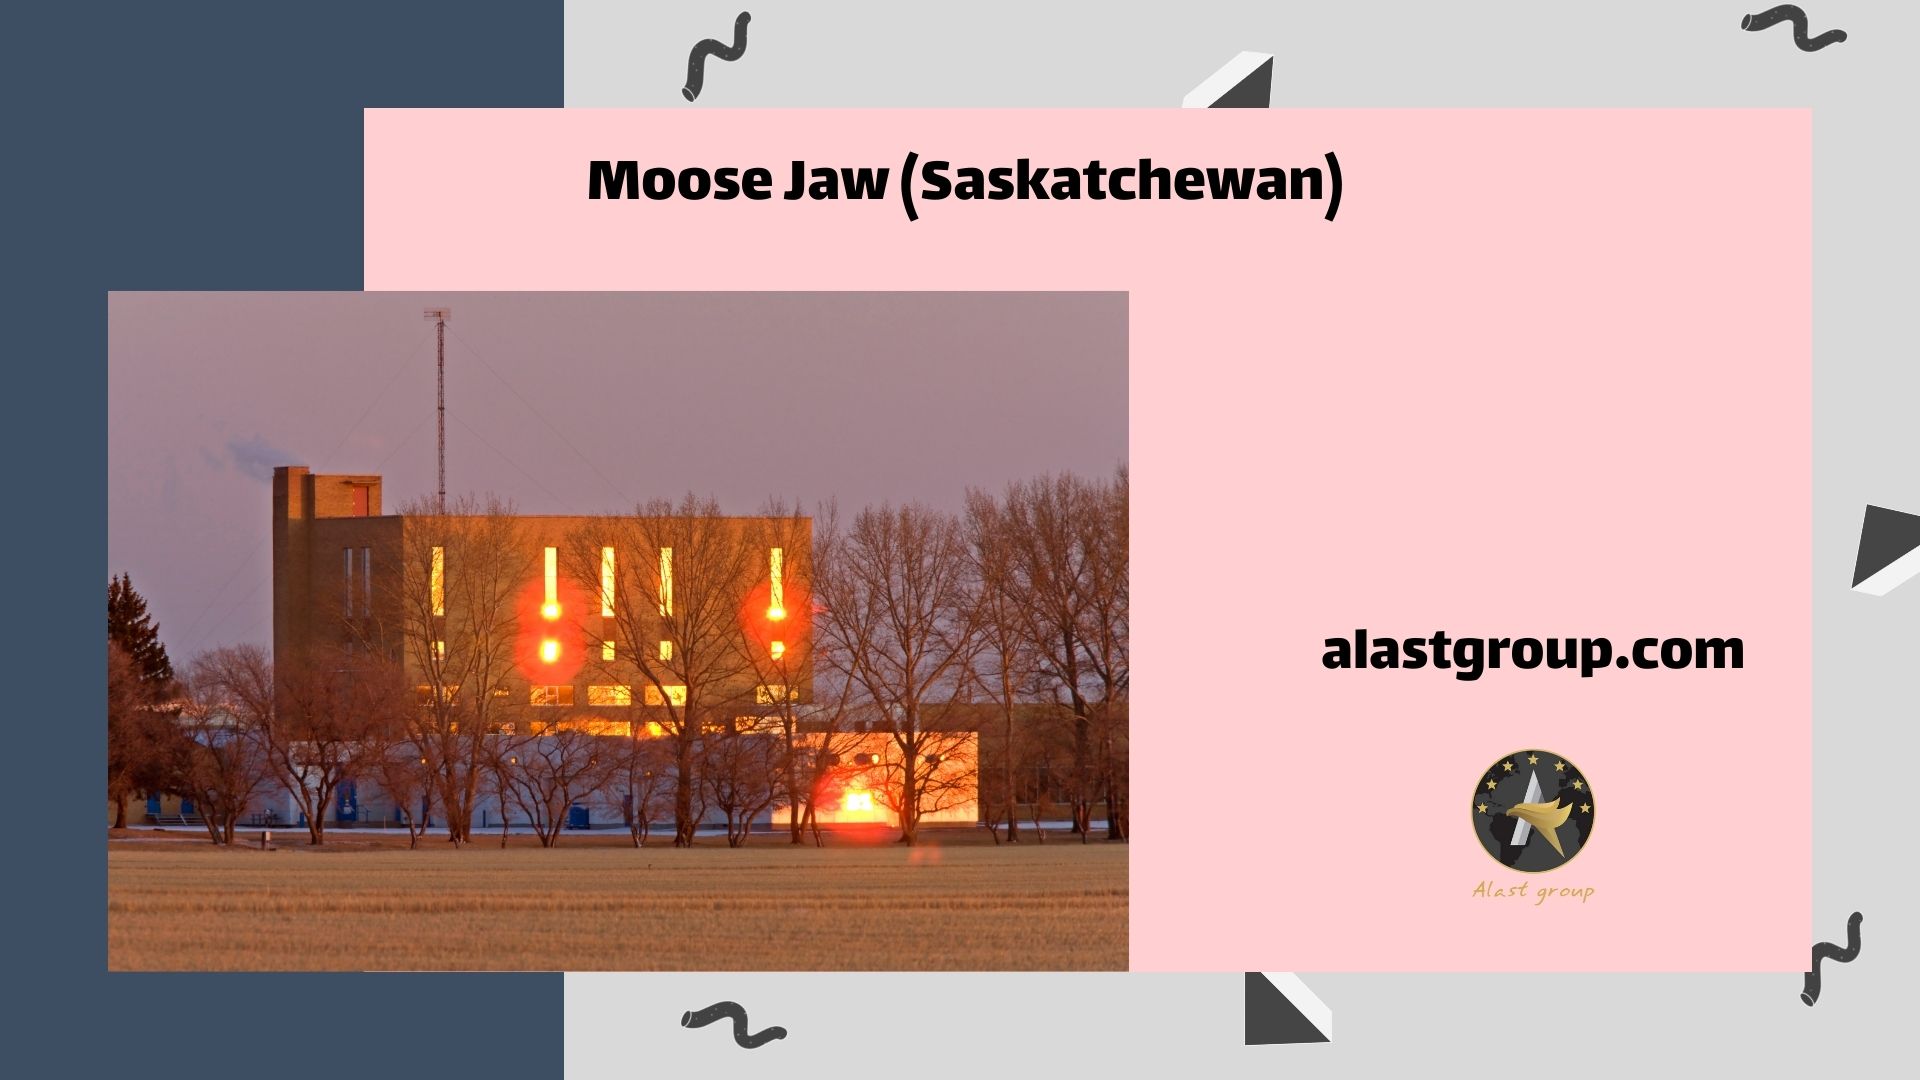 نام شهر: Moose Jaw (Saskatchewan)